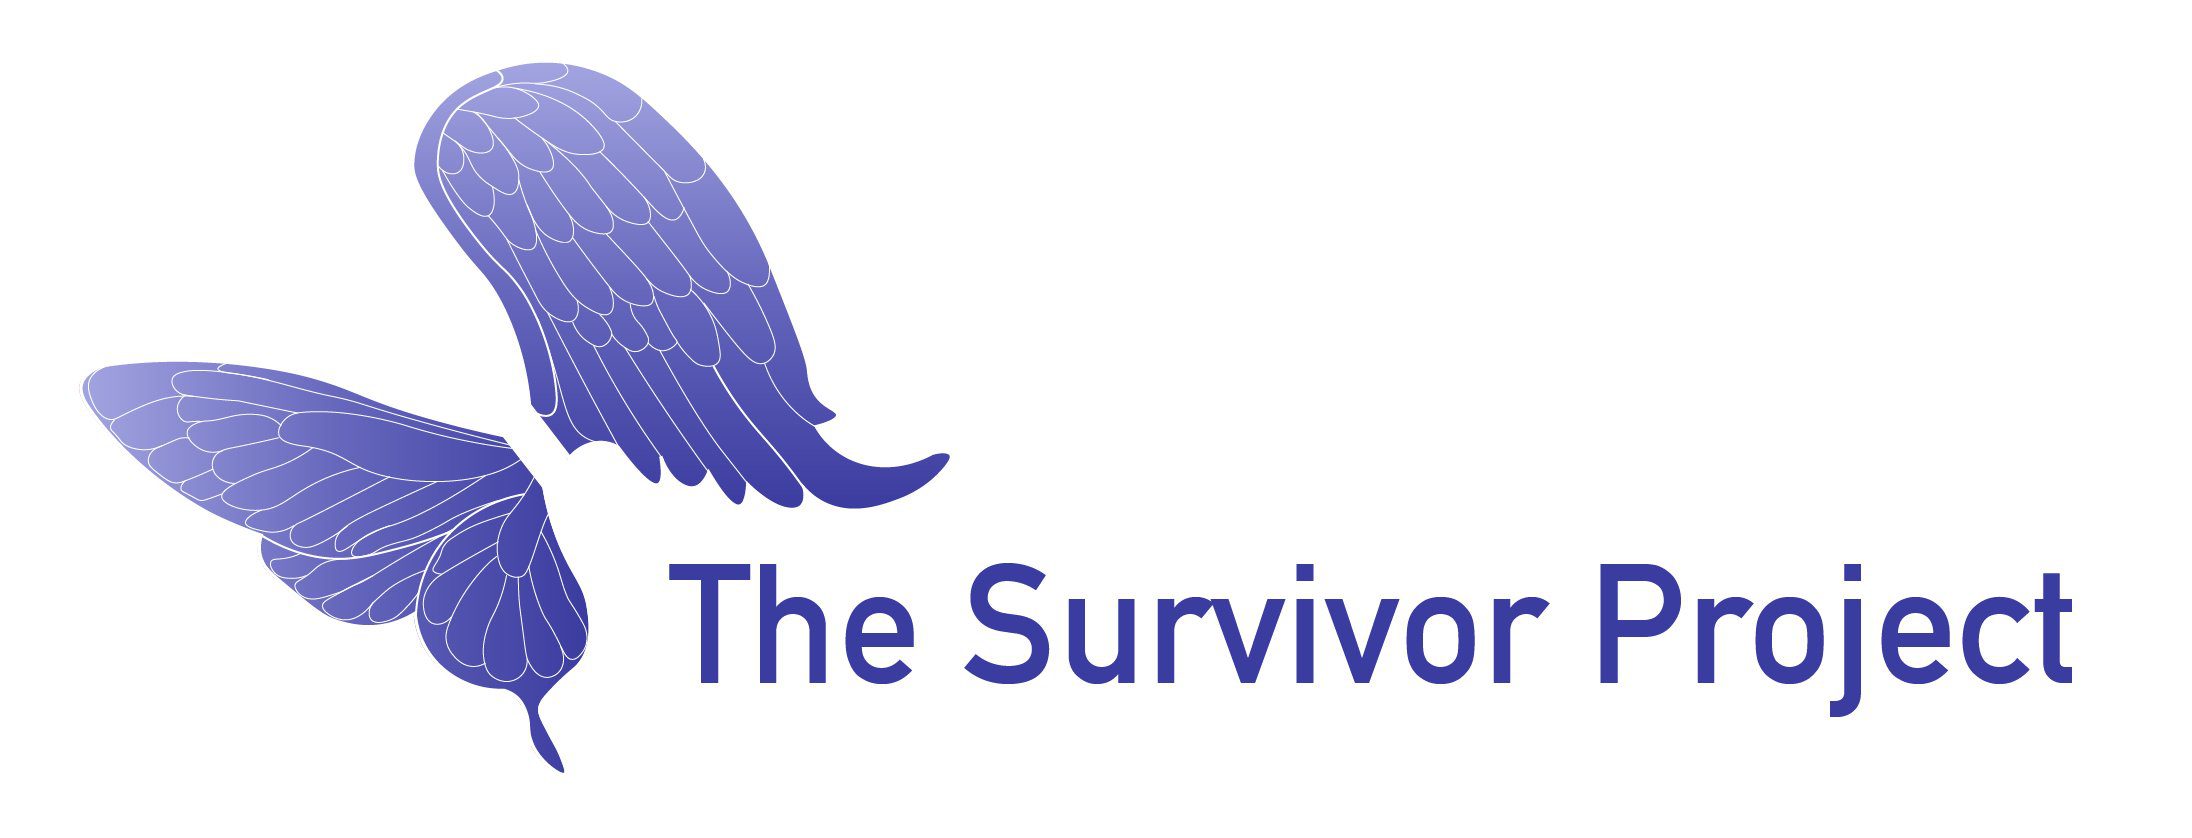 The Survivor Project logo